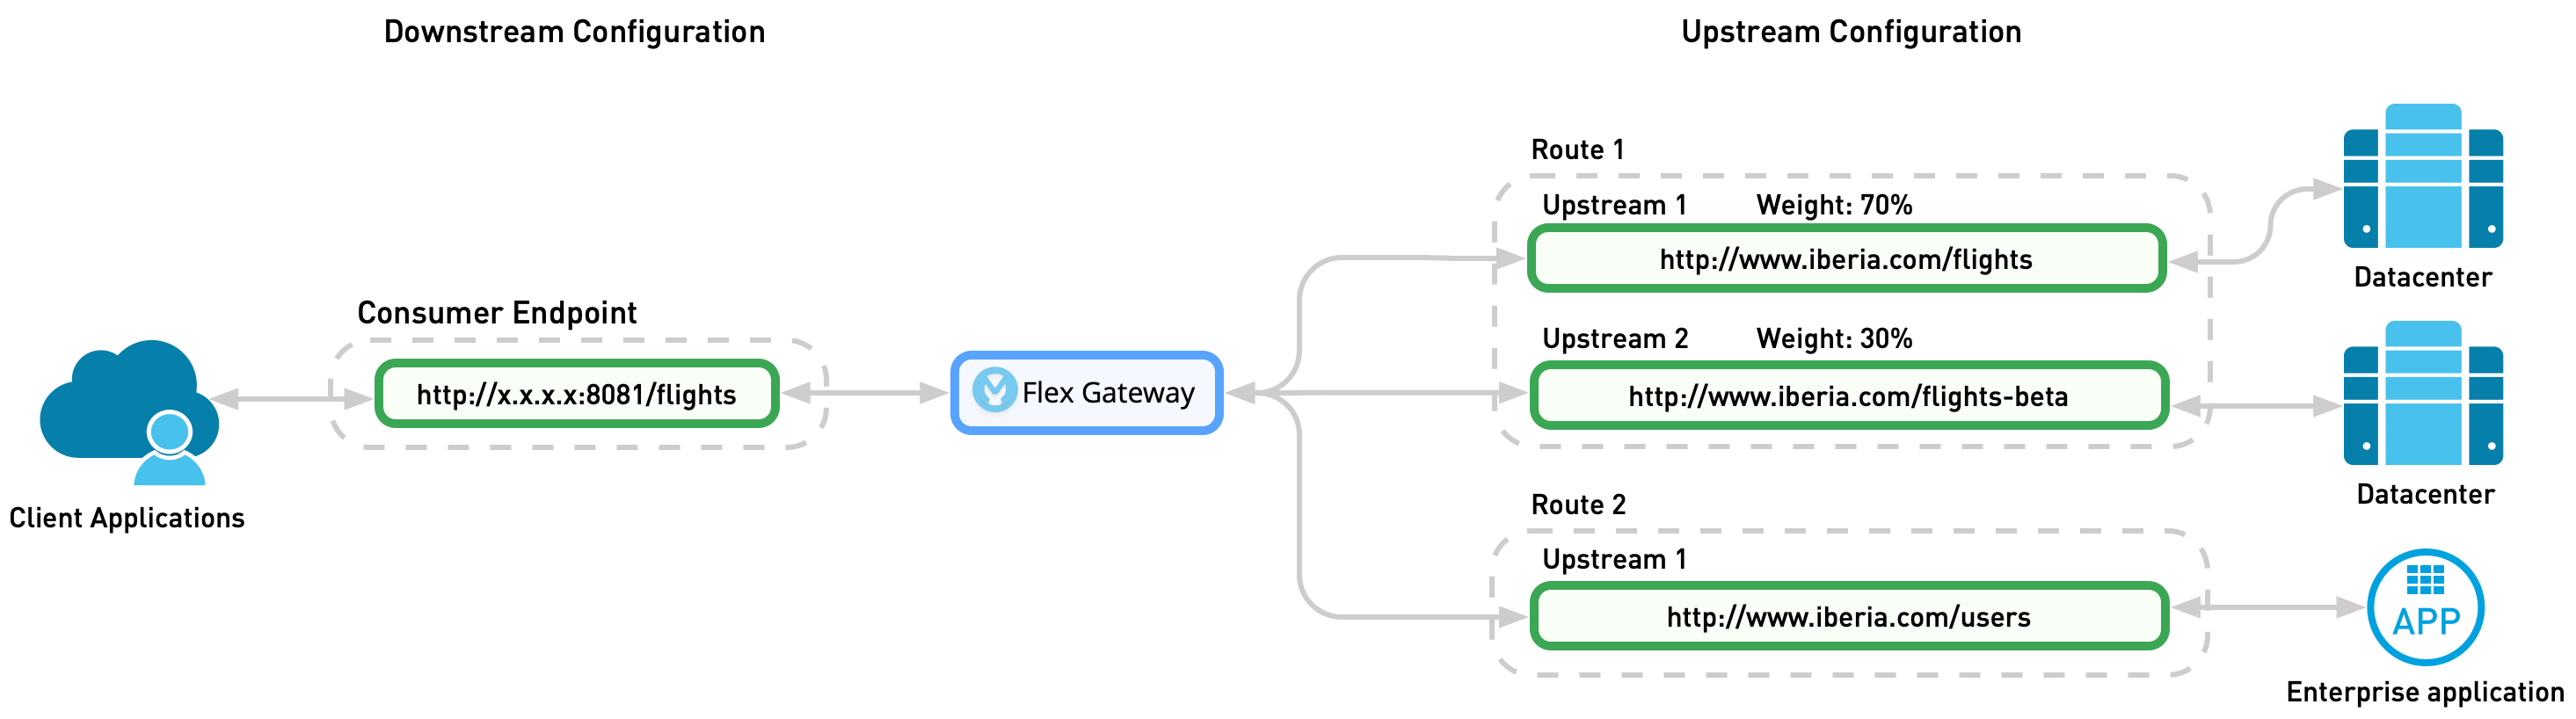 Flex Gateway は複数のアップストリームへのトラフィックを管理する